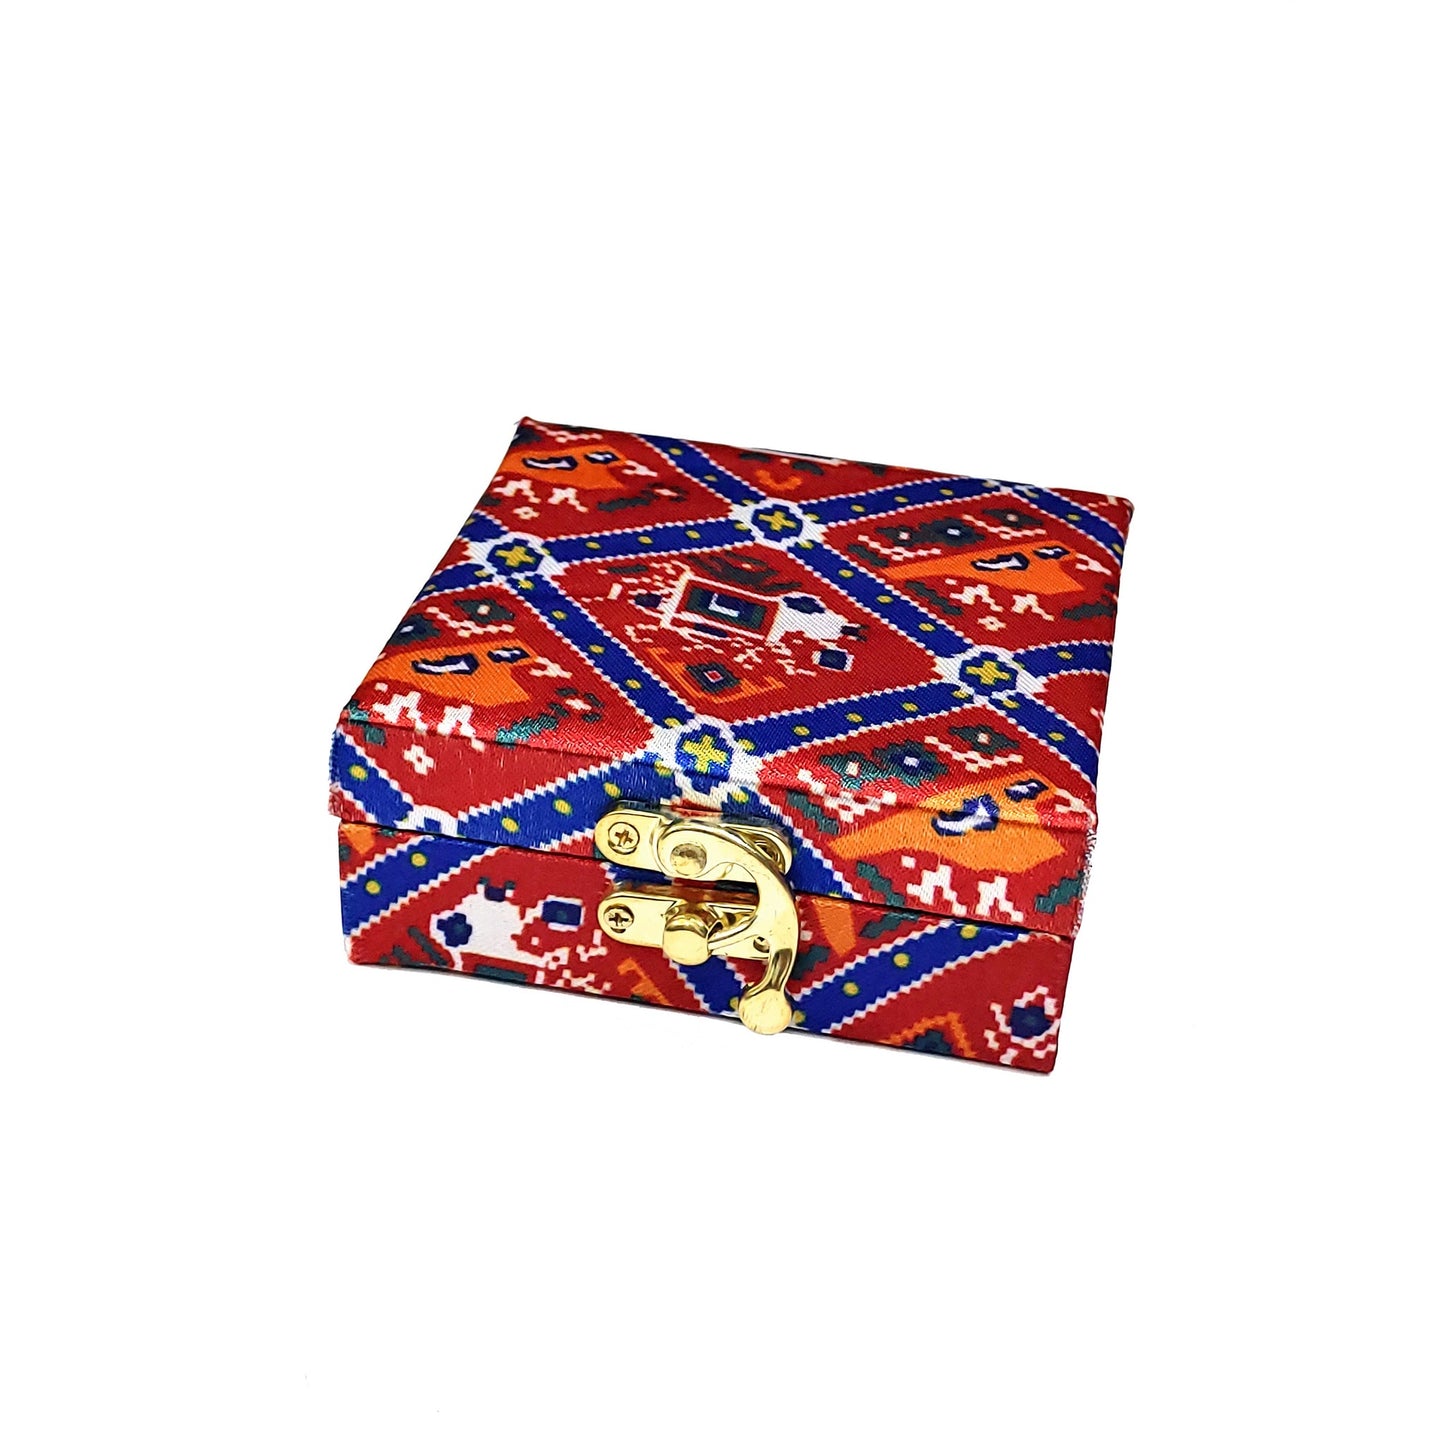 Indian Petals bandhej-gift-box-for-shagun-box-wedding-gift-box